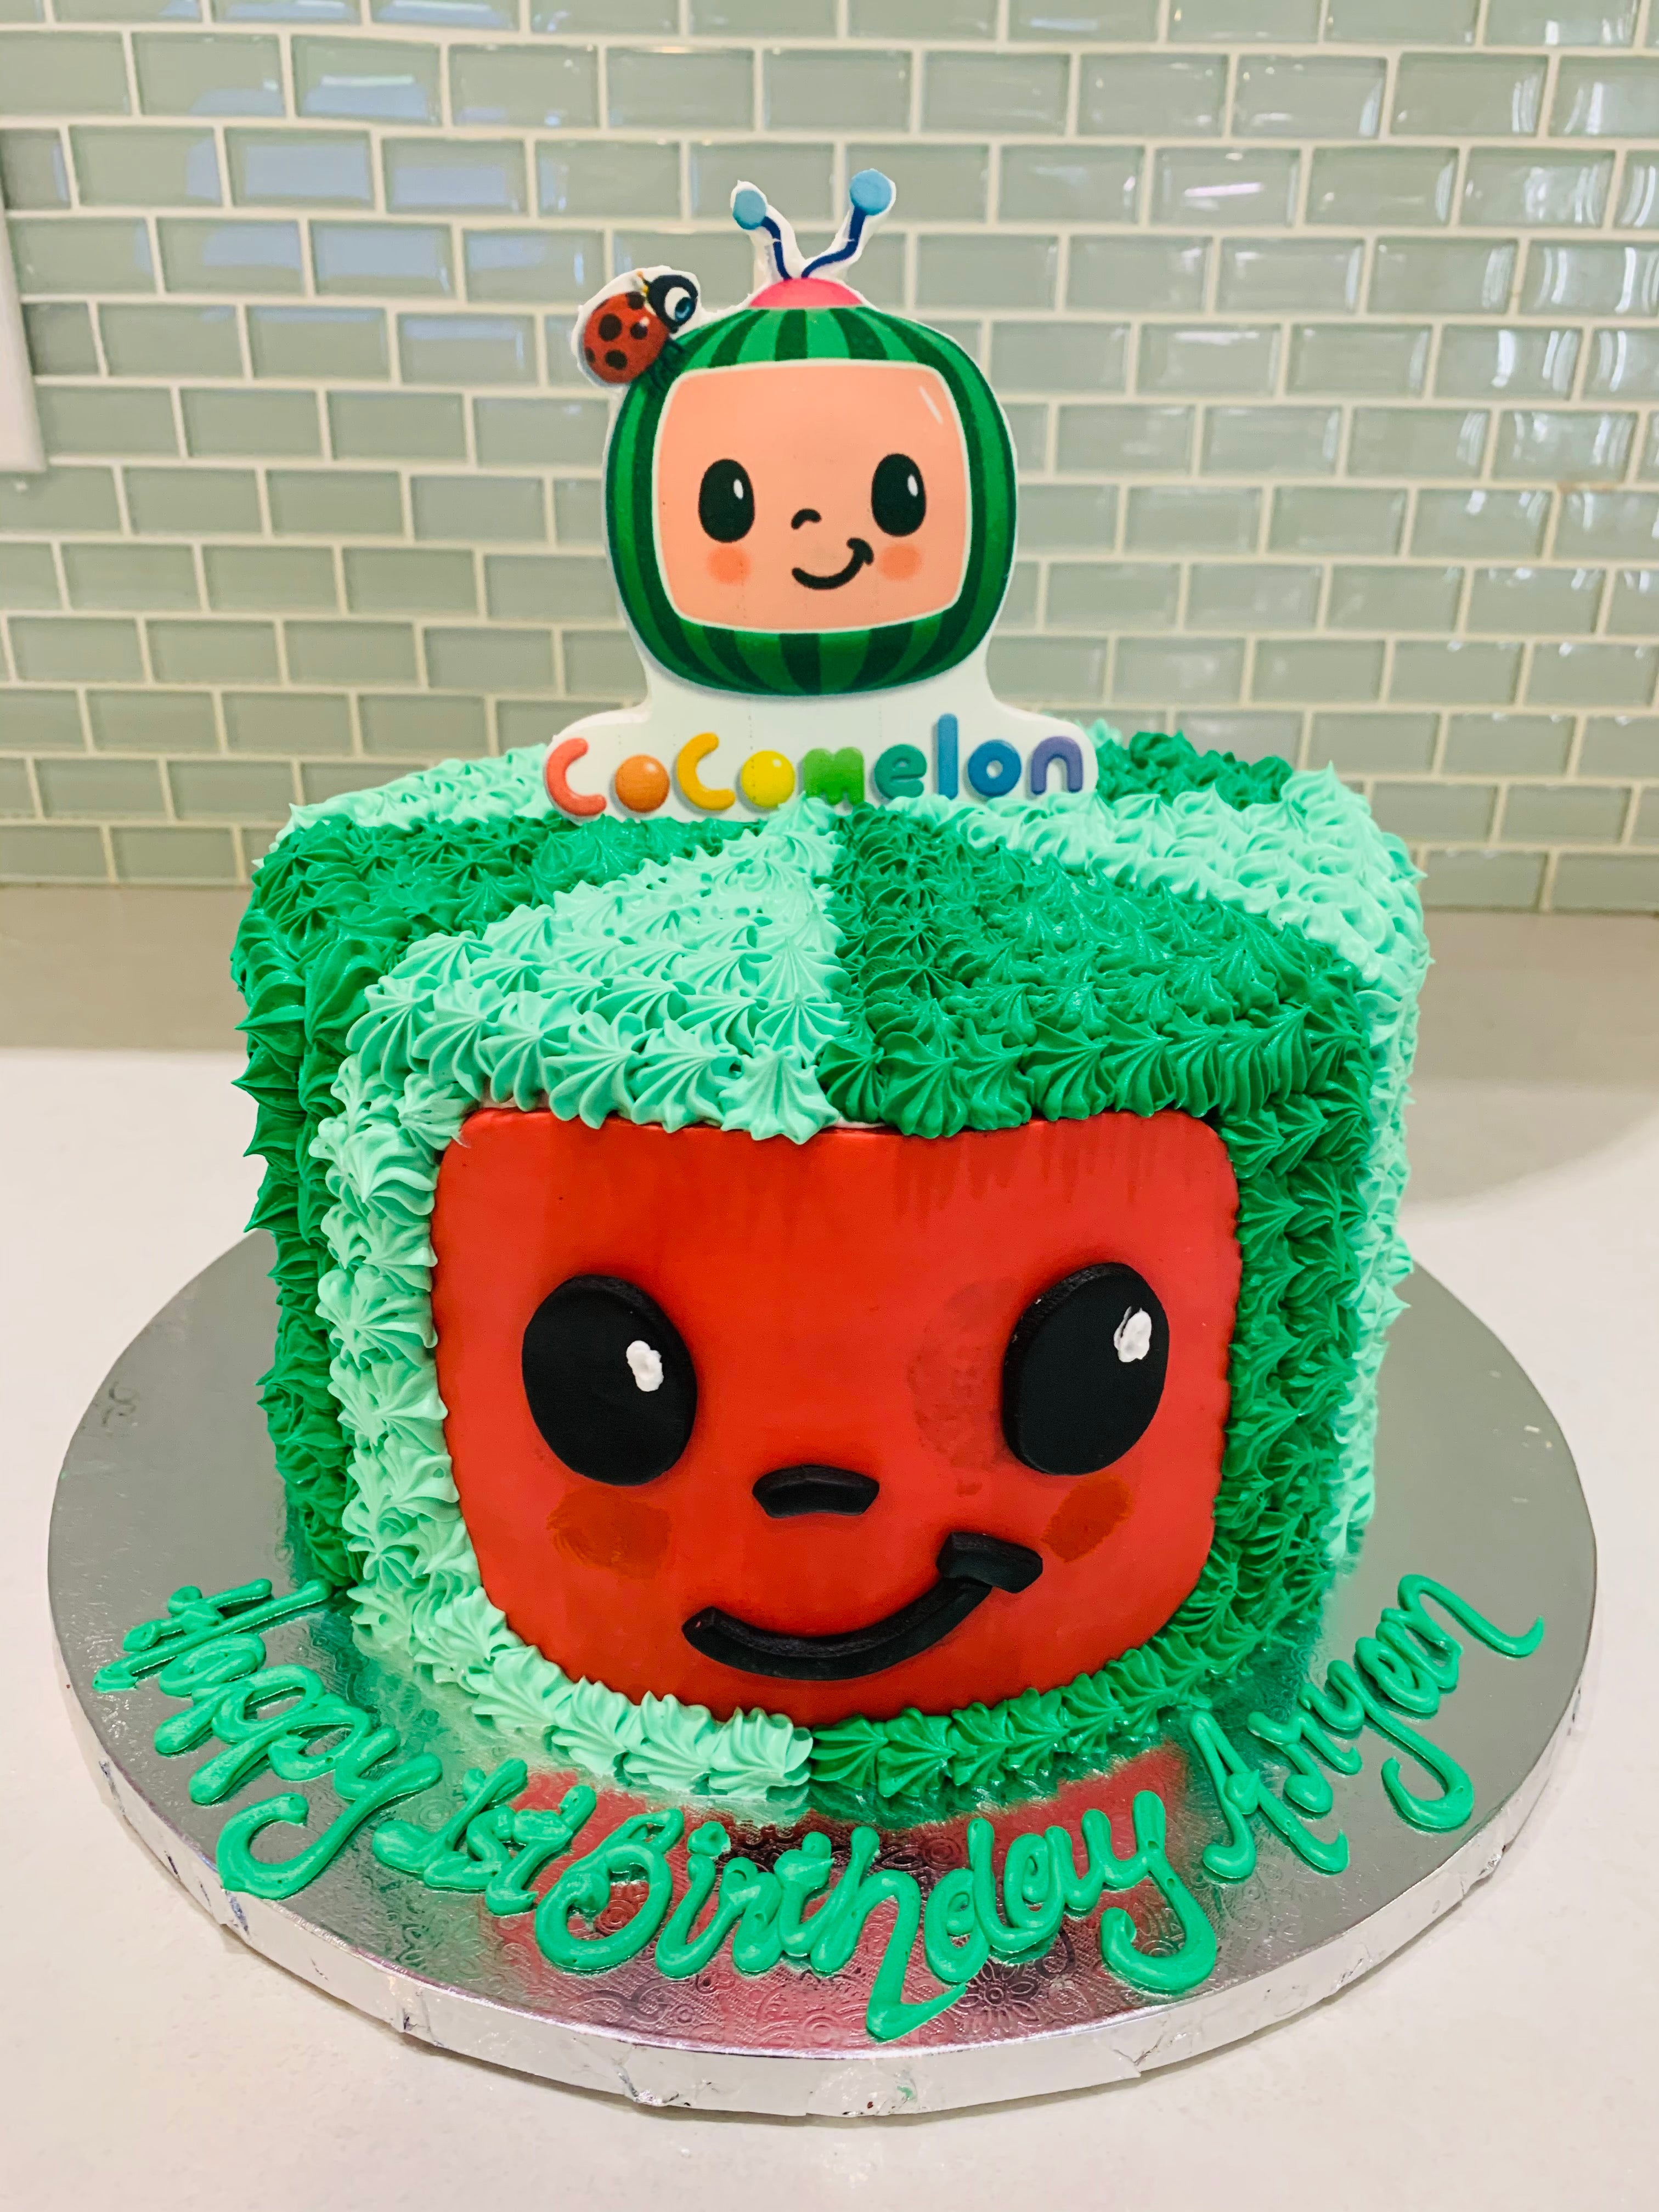 Dreamy Cocomelon Theme Cake - Wishingcart.in